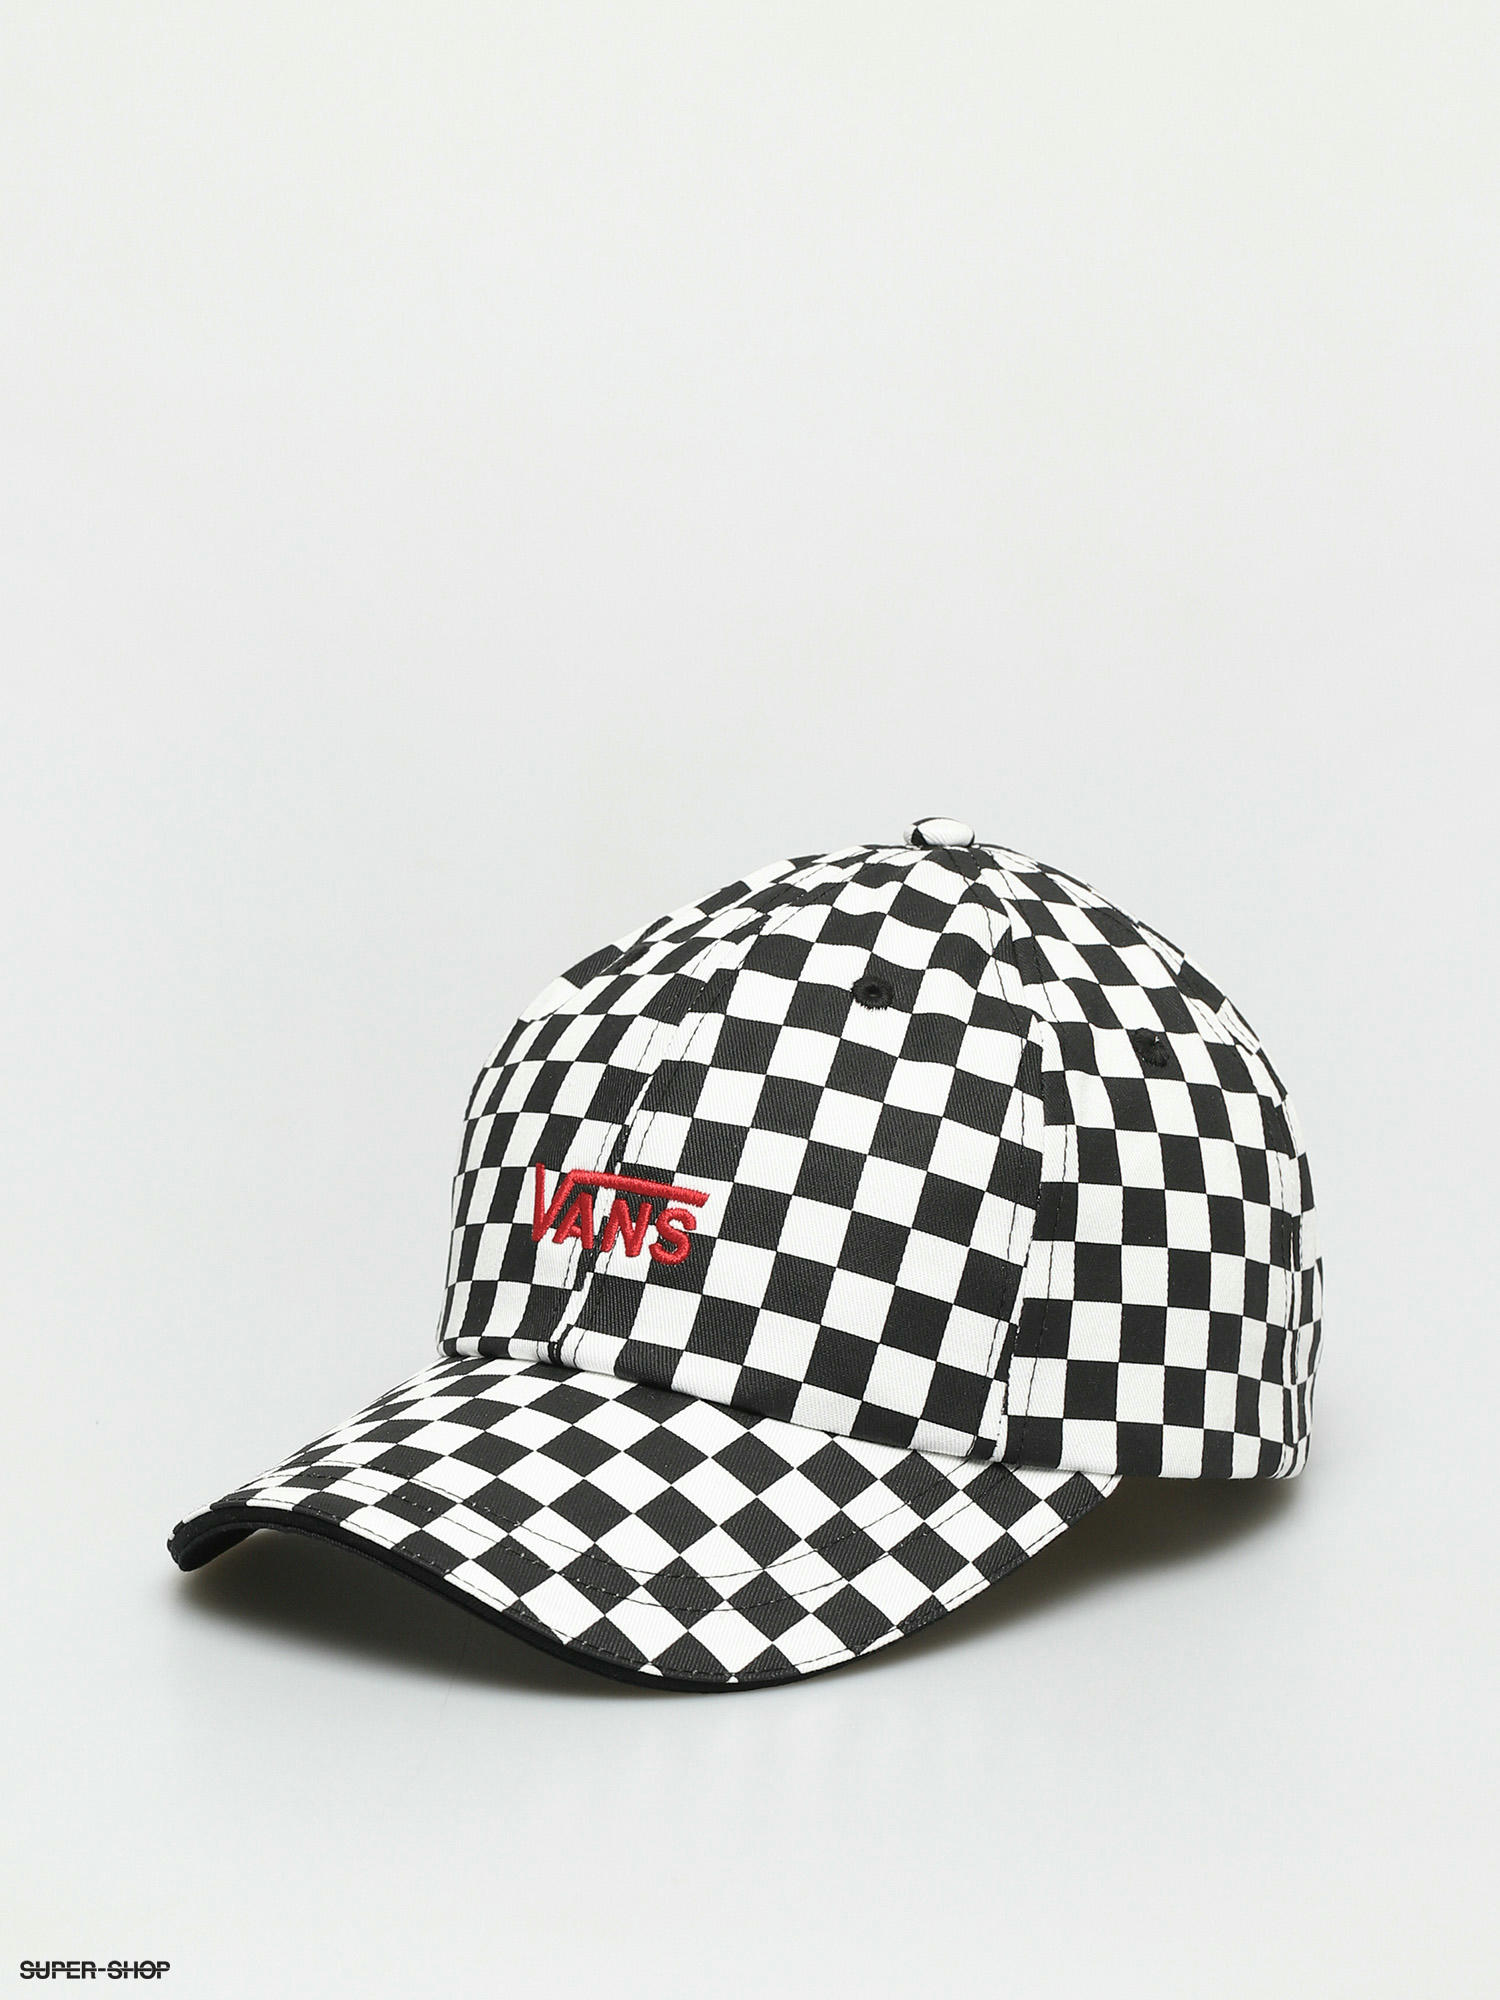 checkerboard vans hat